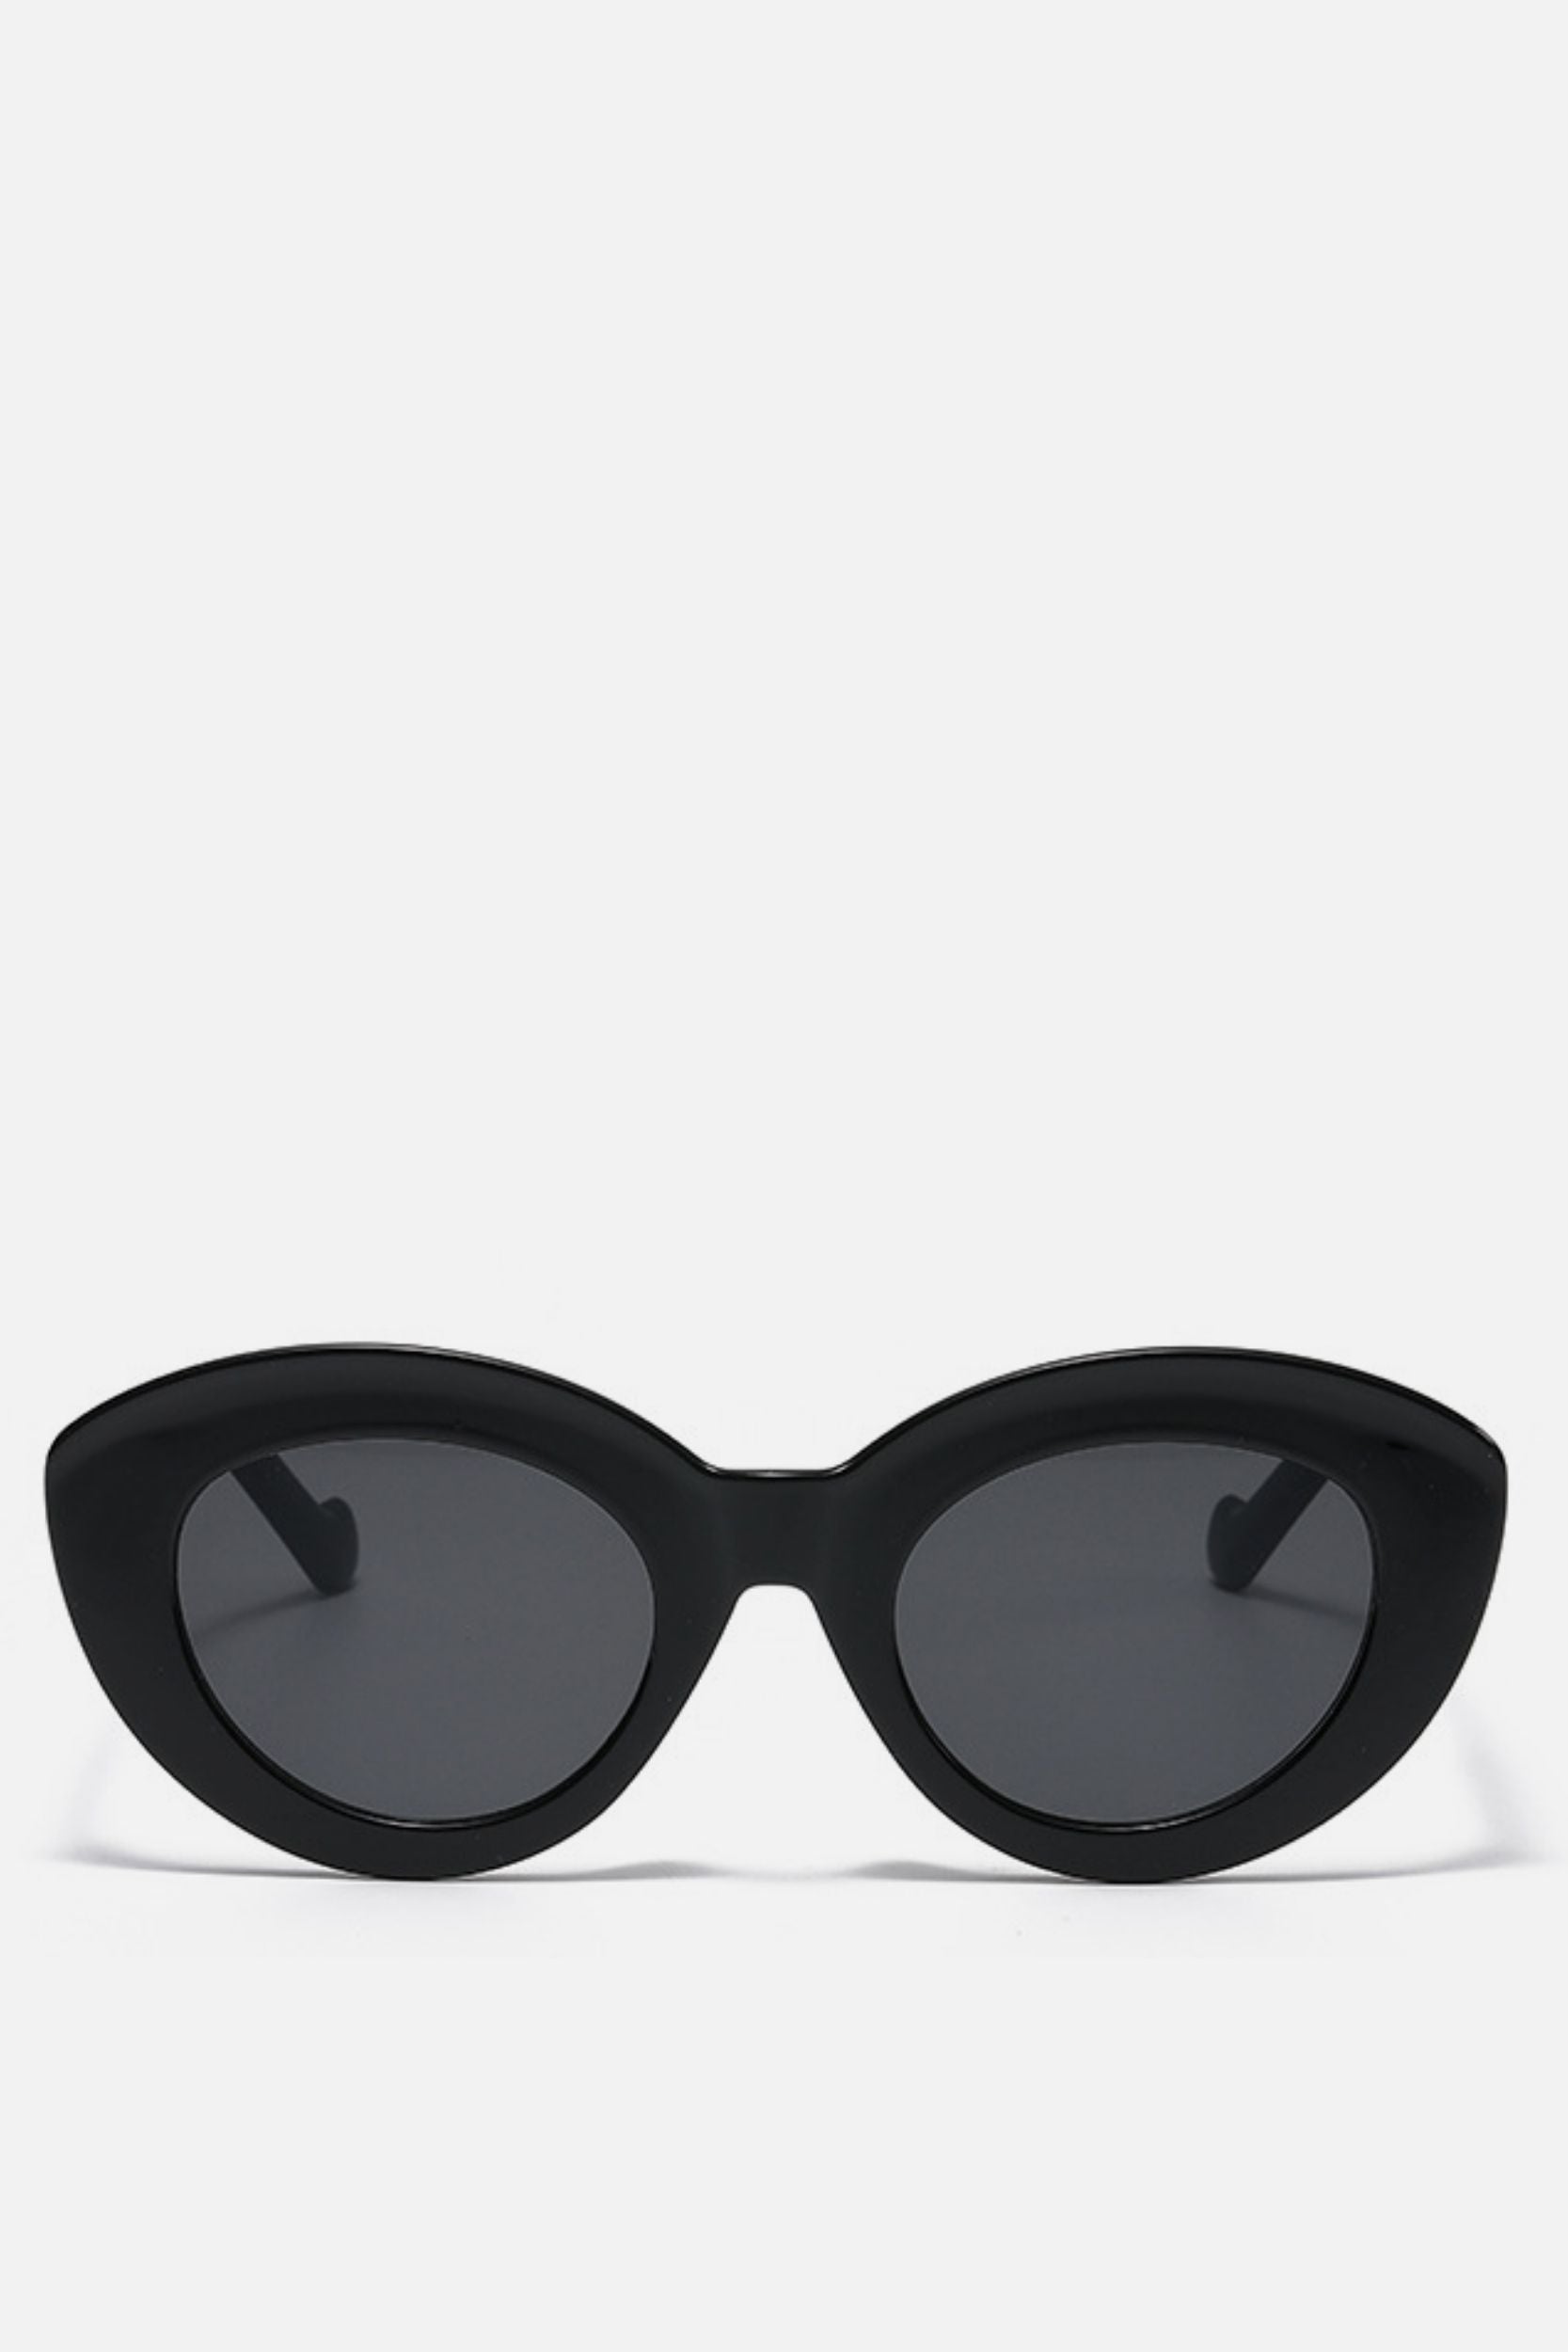 RAVELLO Round Black Sunglasses